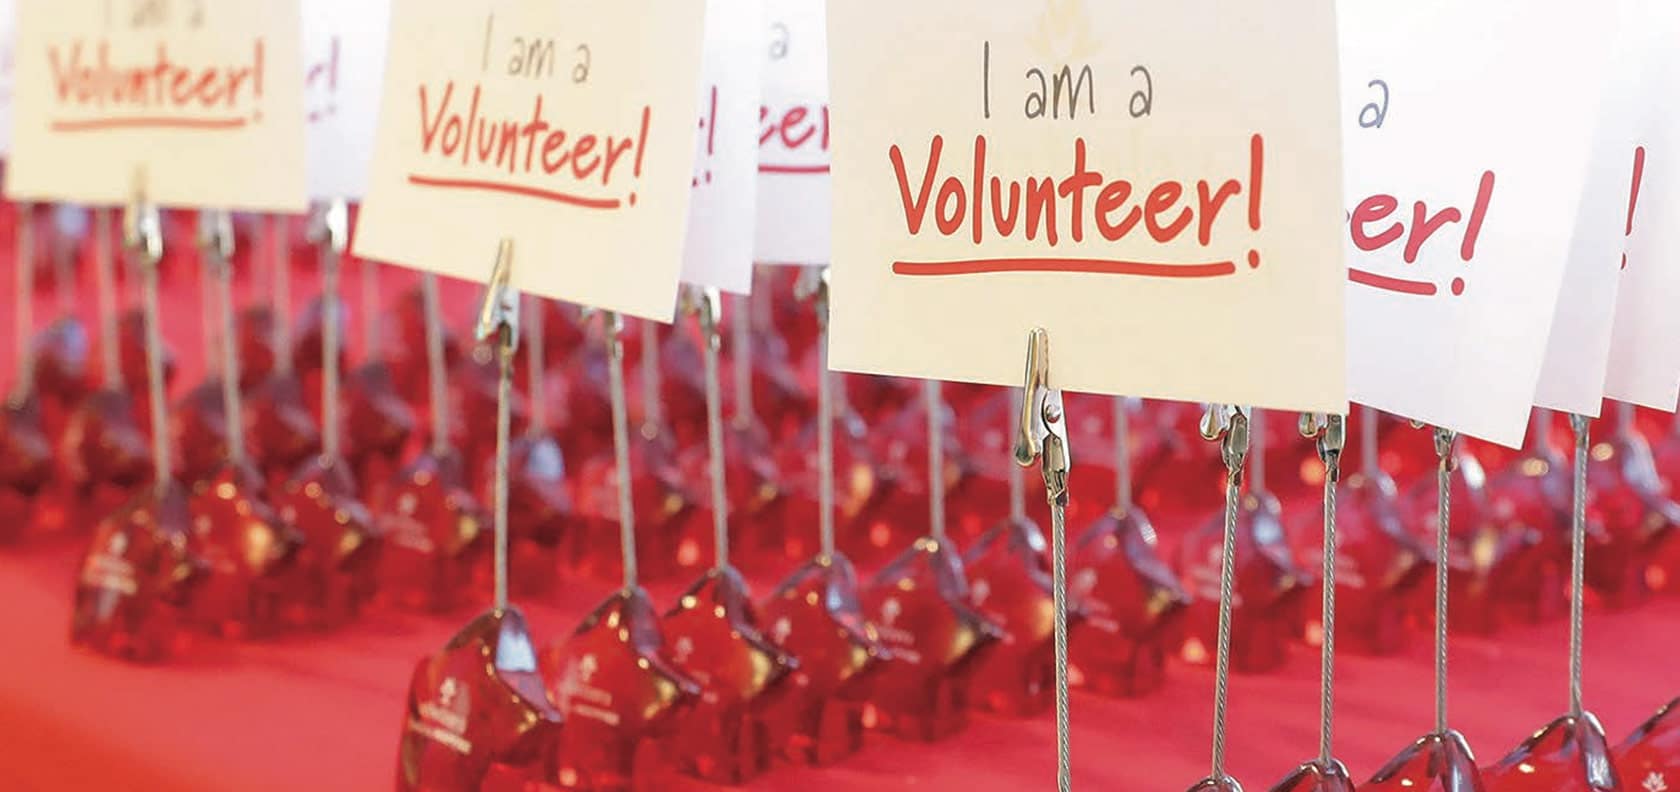 Volunteer signs for volunteers at Mapfre event.